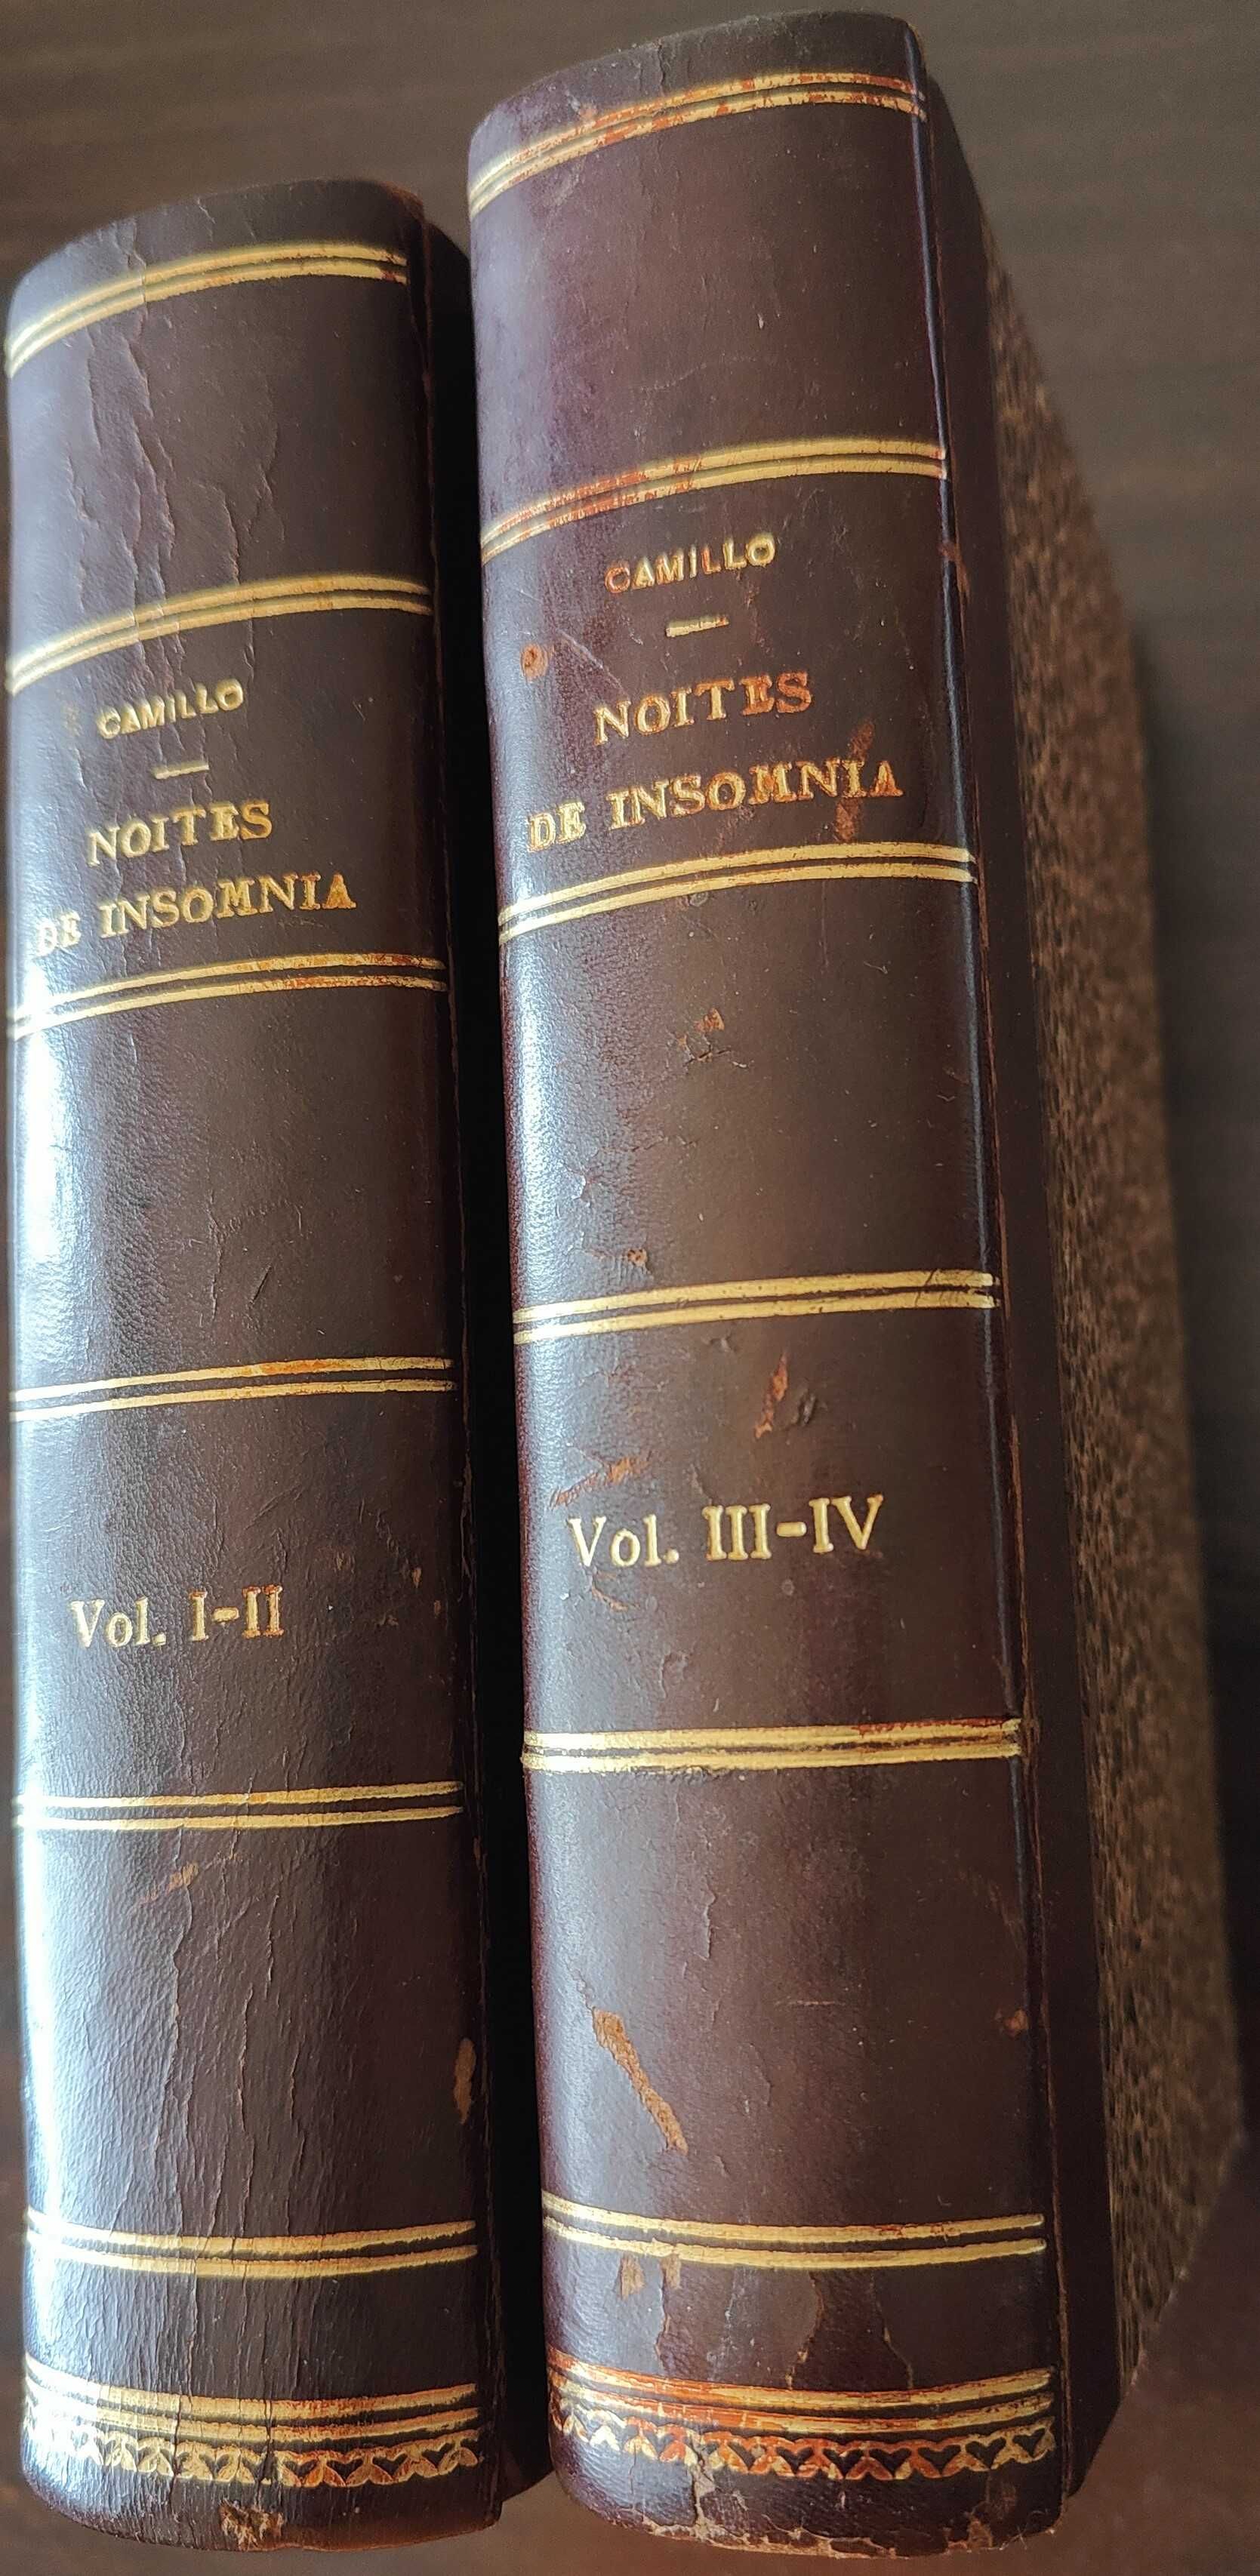 Camillo Castelo Branco - Noites de Insomnia Vol. I-II e Vol III-IV